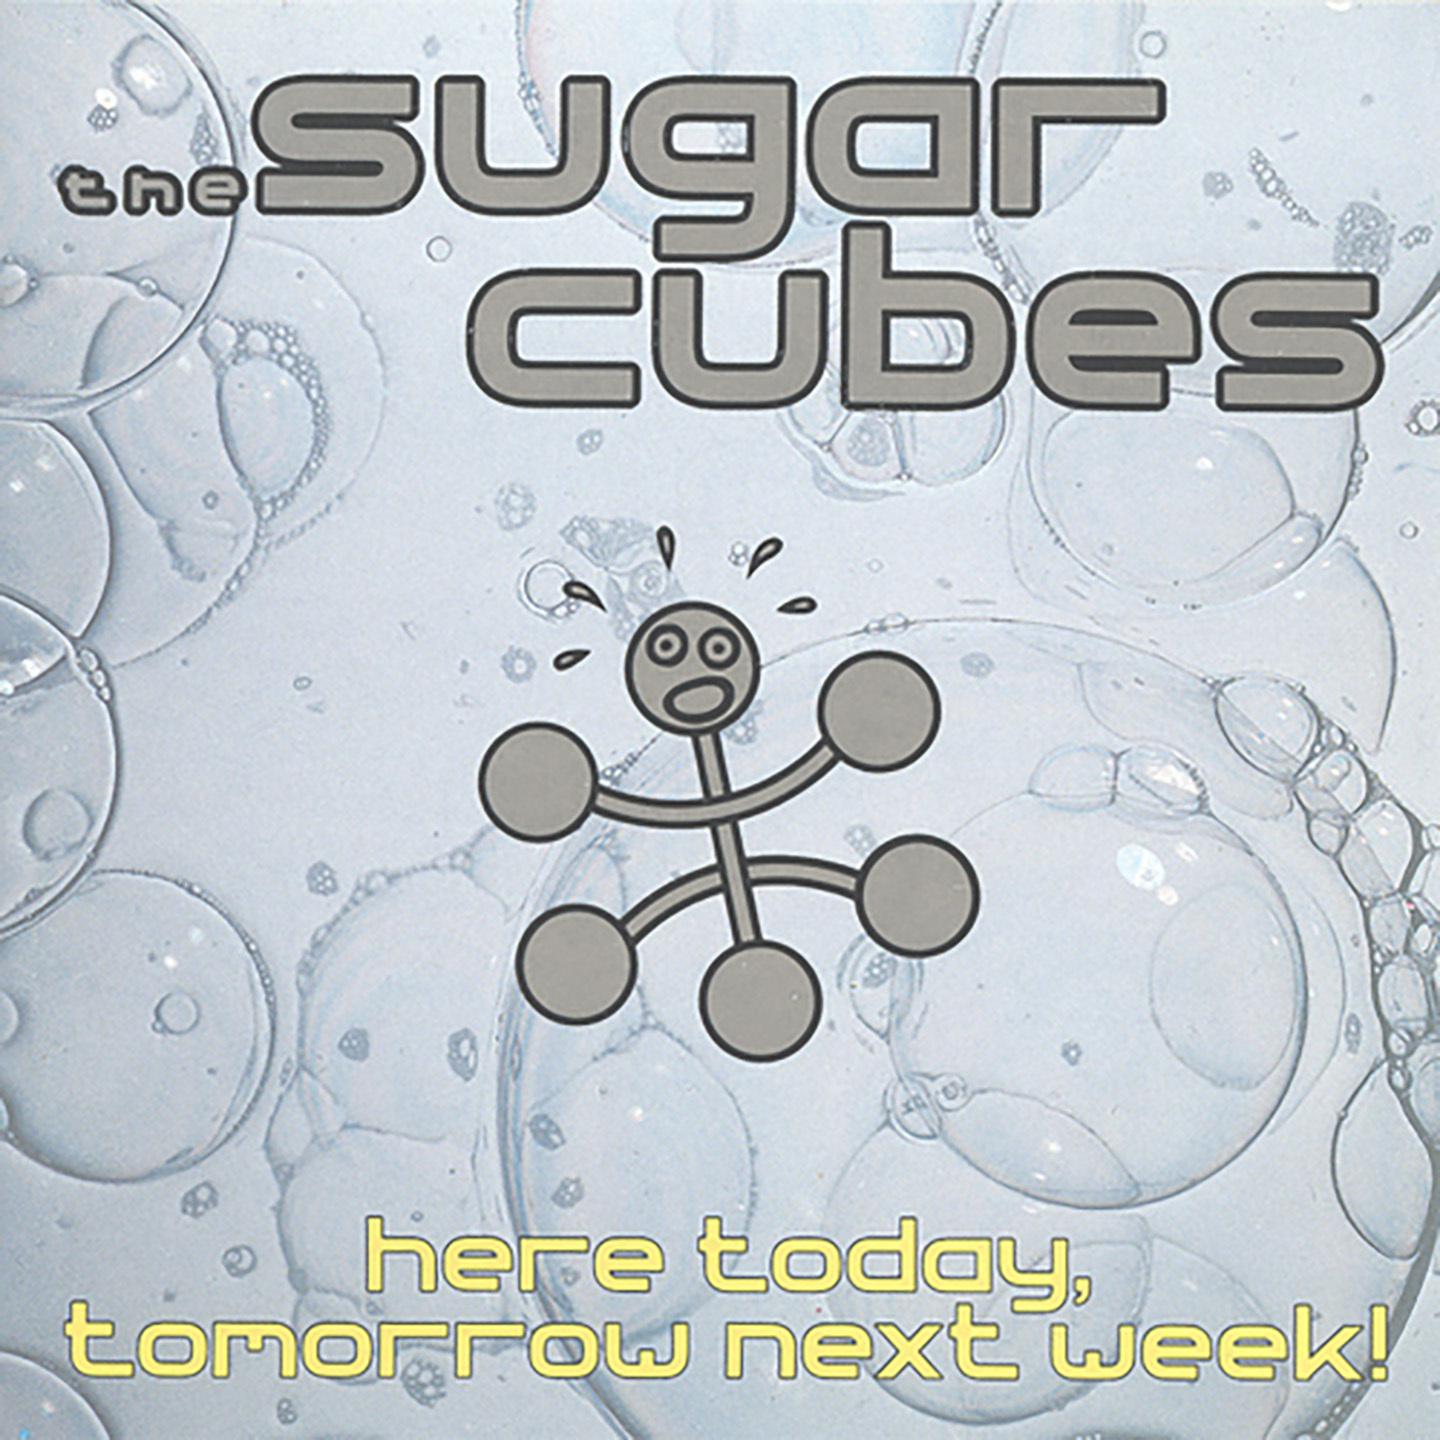 The Sugarcubes - Eat The Menu